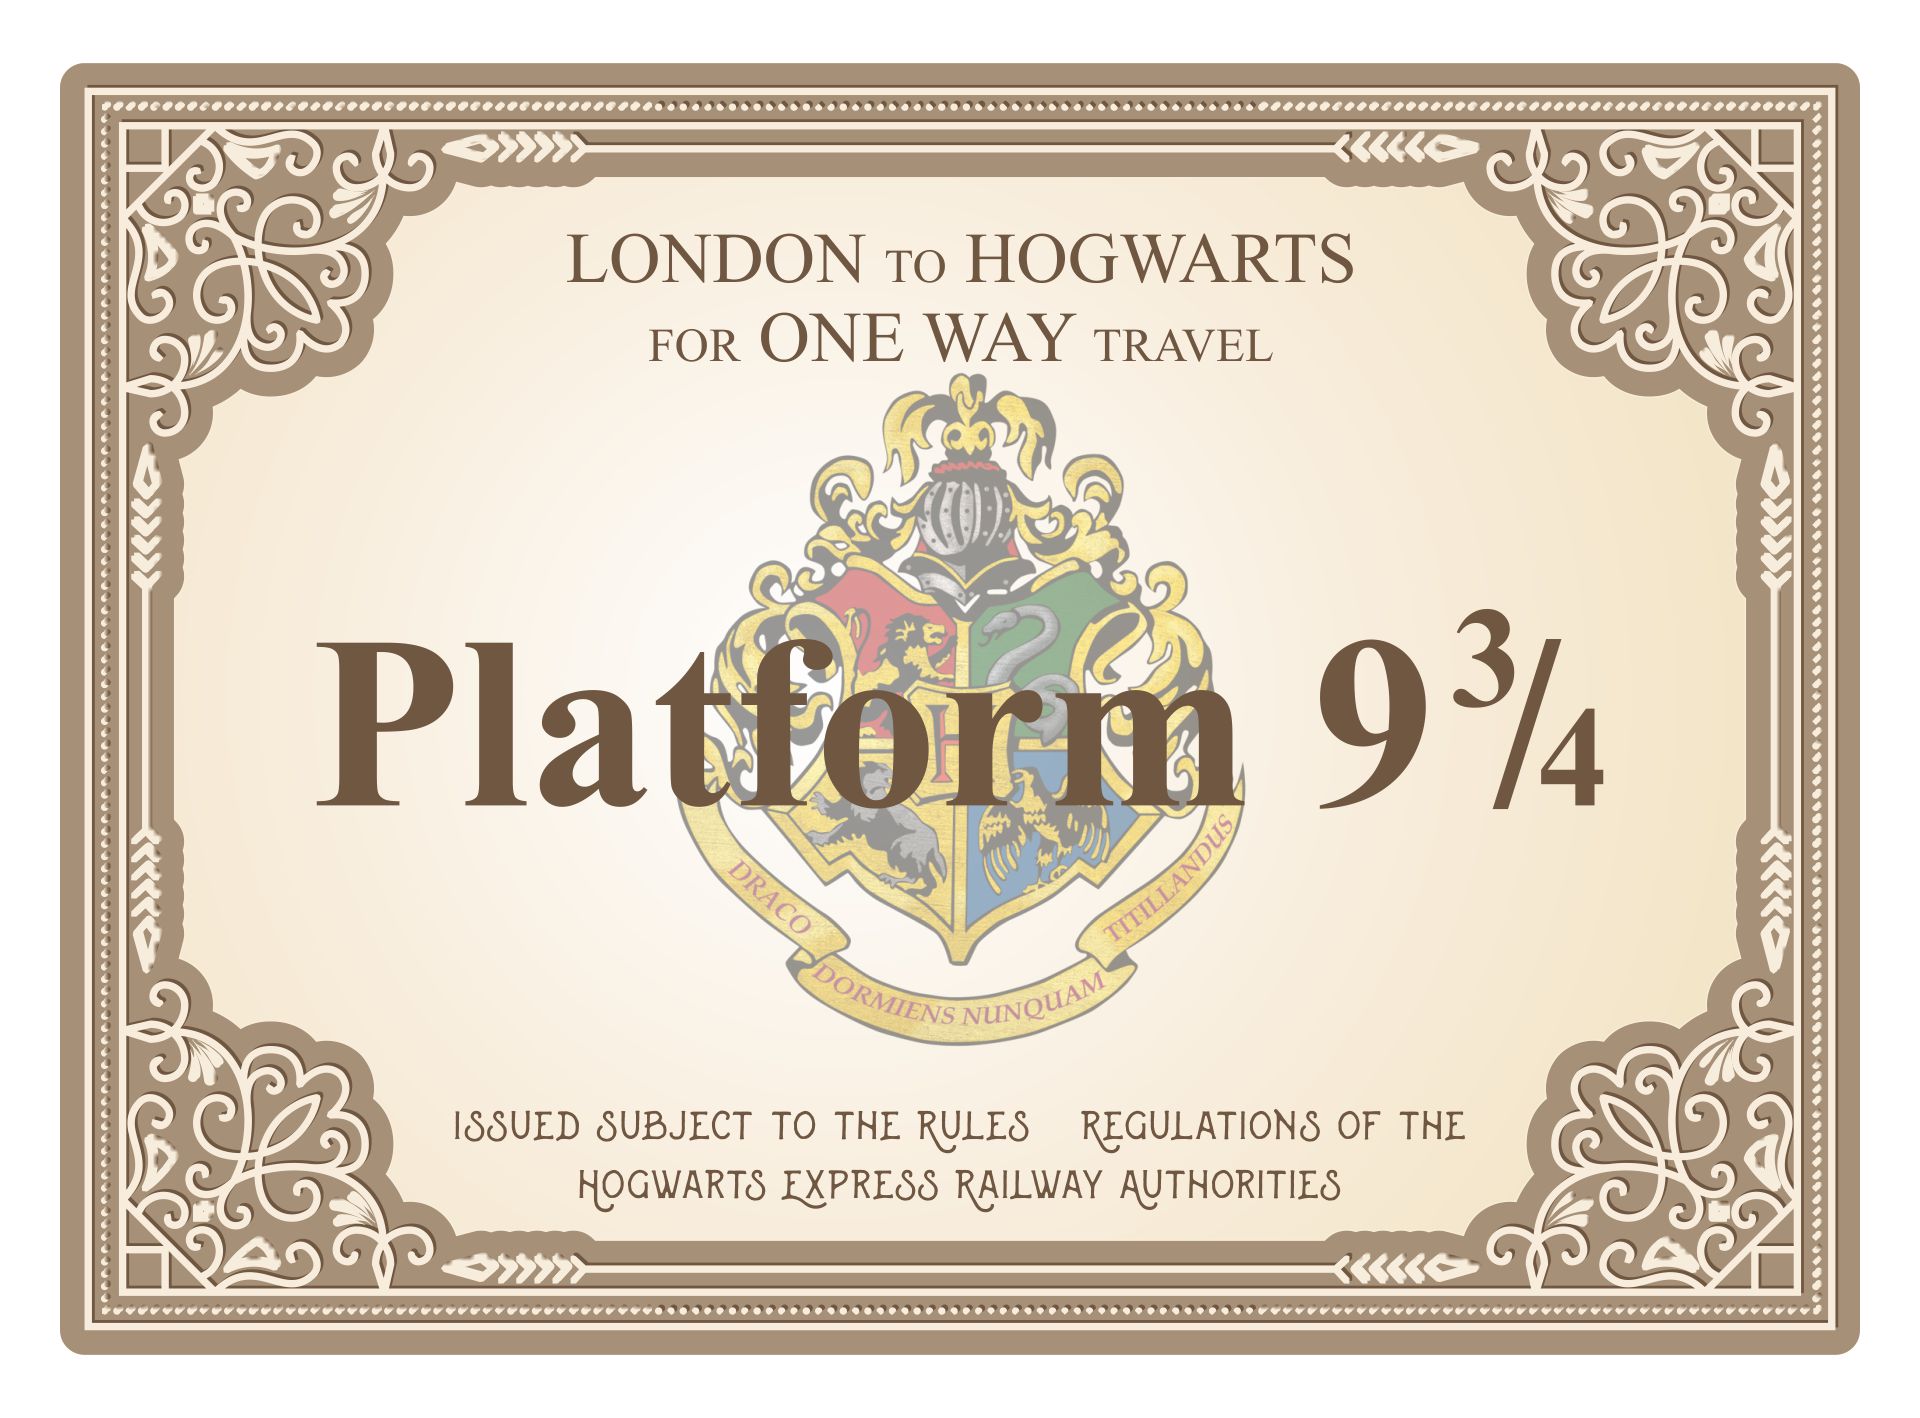 Free Printable Harry Potter Train Ticket